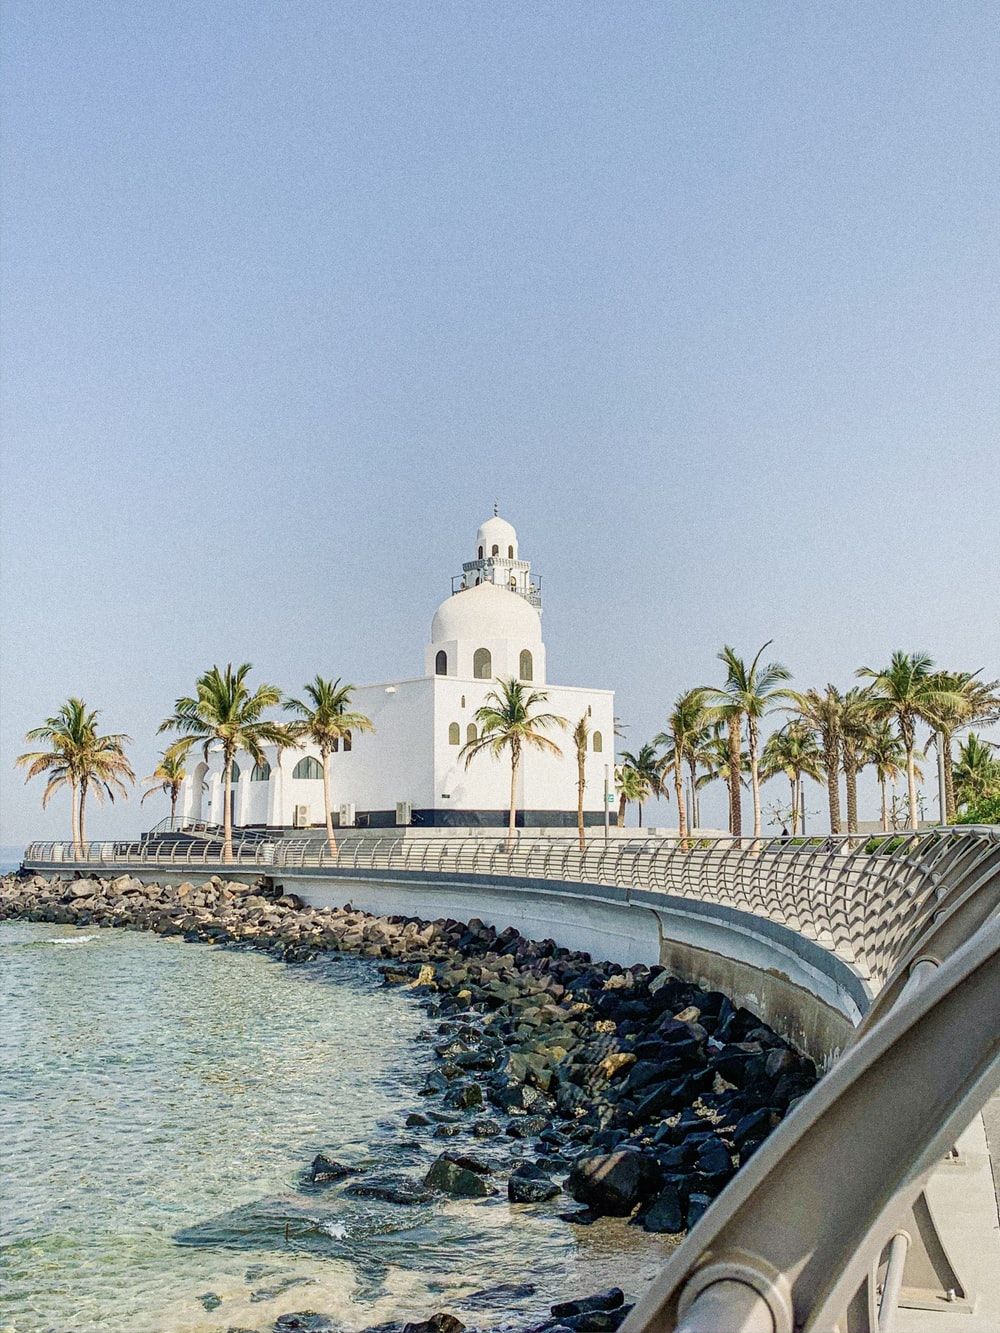 Jeddah, Saudi Arabia Picture. Download Free Image